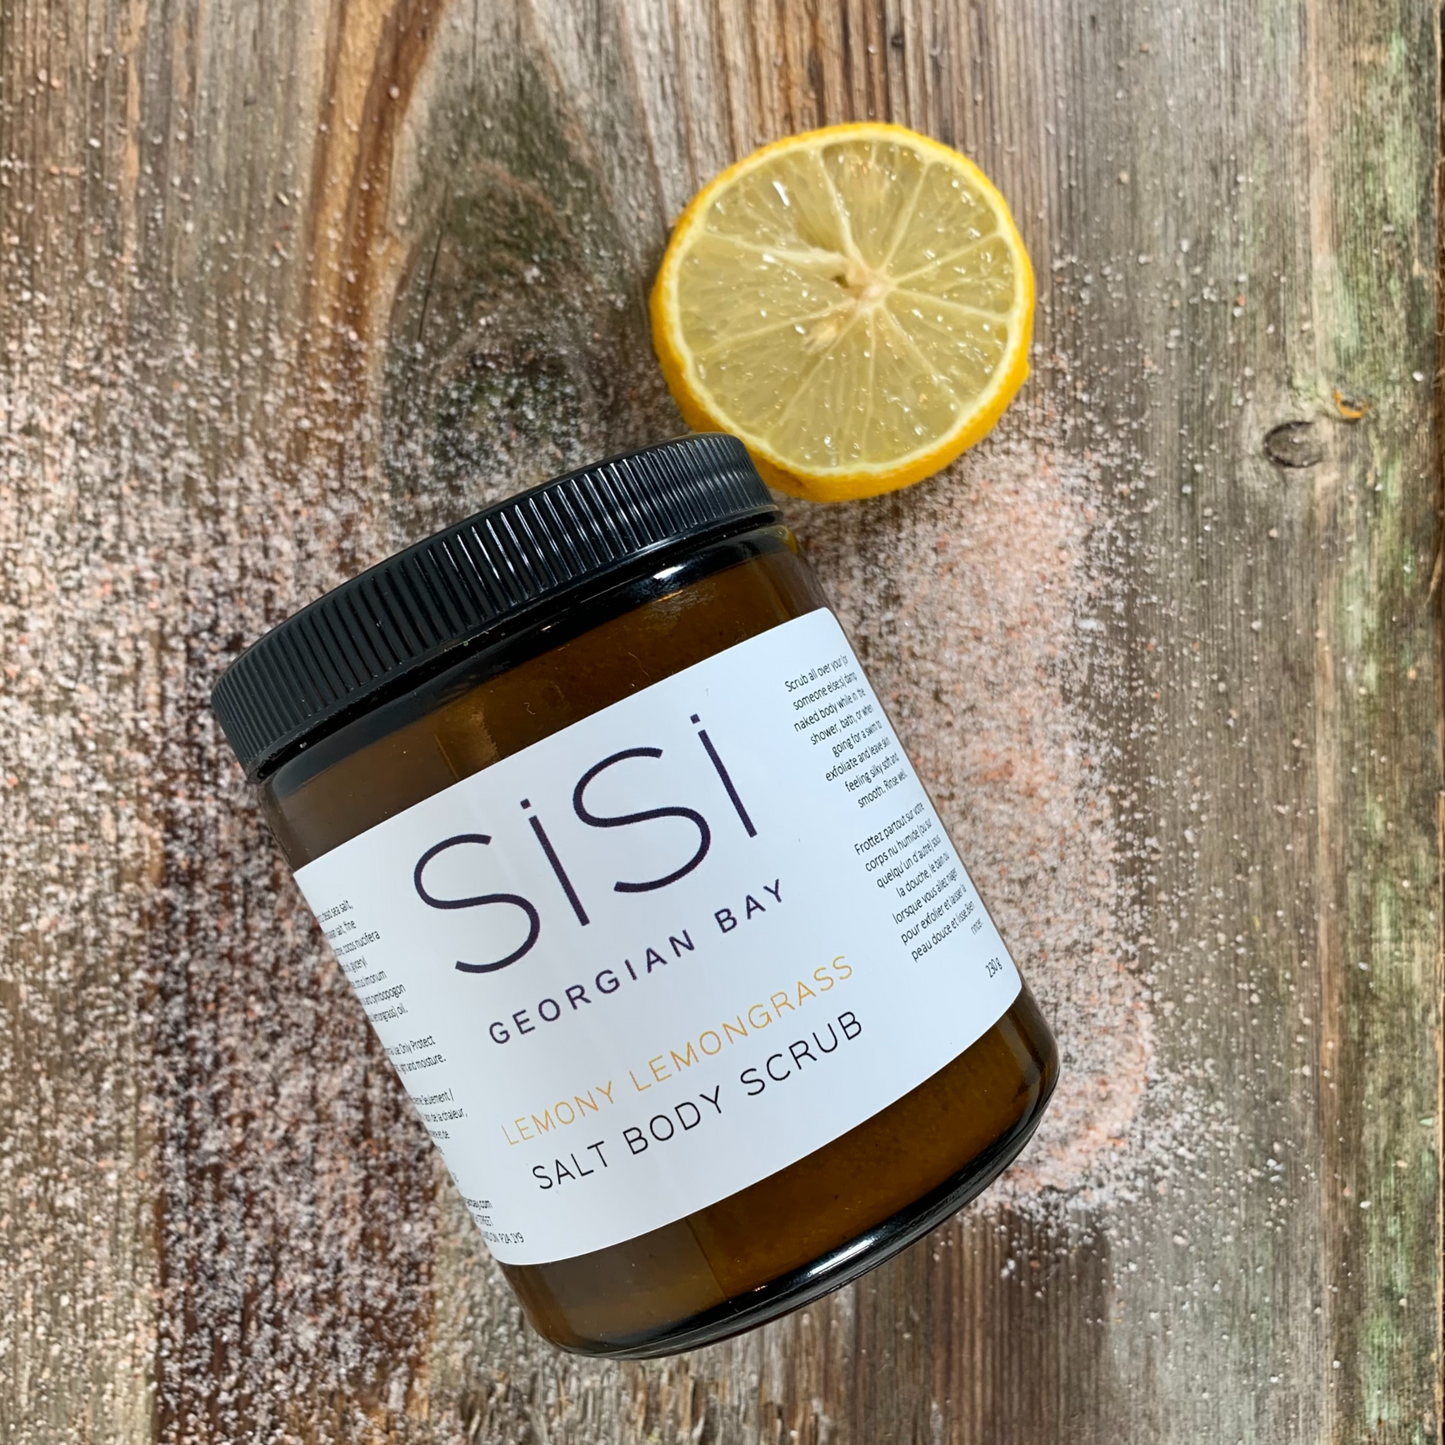 SiSi Georgian Bay Lemony lemongrass salt scrub in an amber glass jar on a rustic wood surface with a lemon slice beside it and salt sprinkled around it